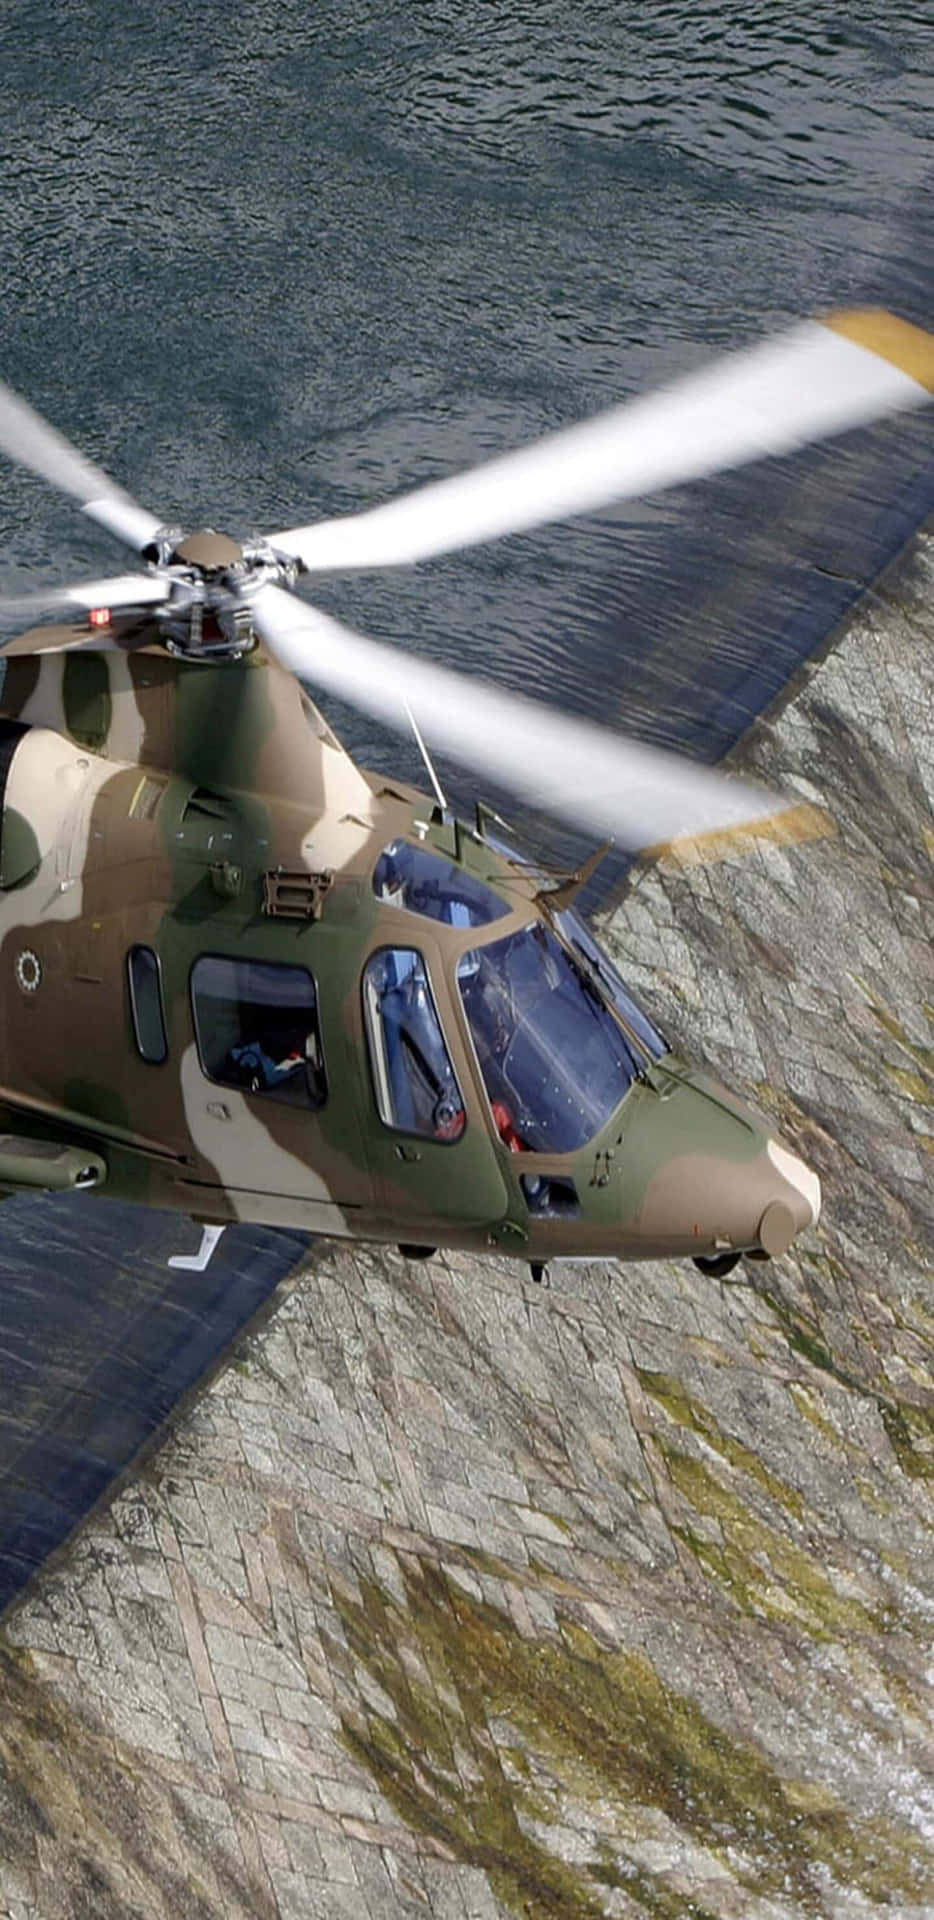 Pixel3xl Bakgrundsbilder Helikoptrar Agustawestland Aw109